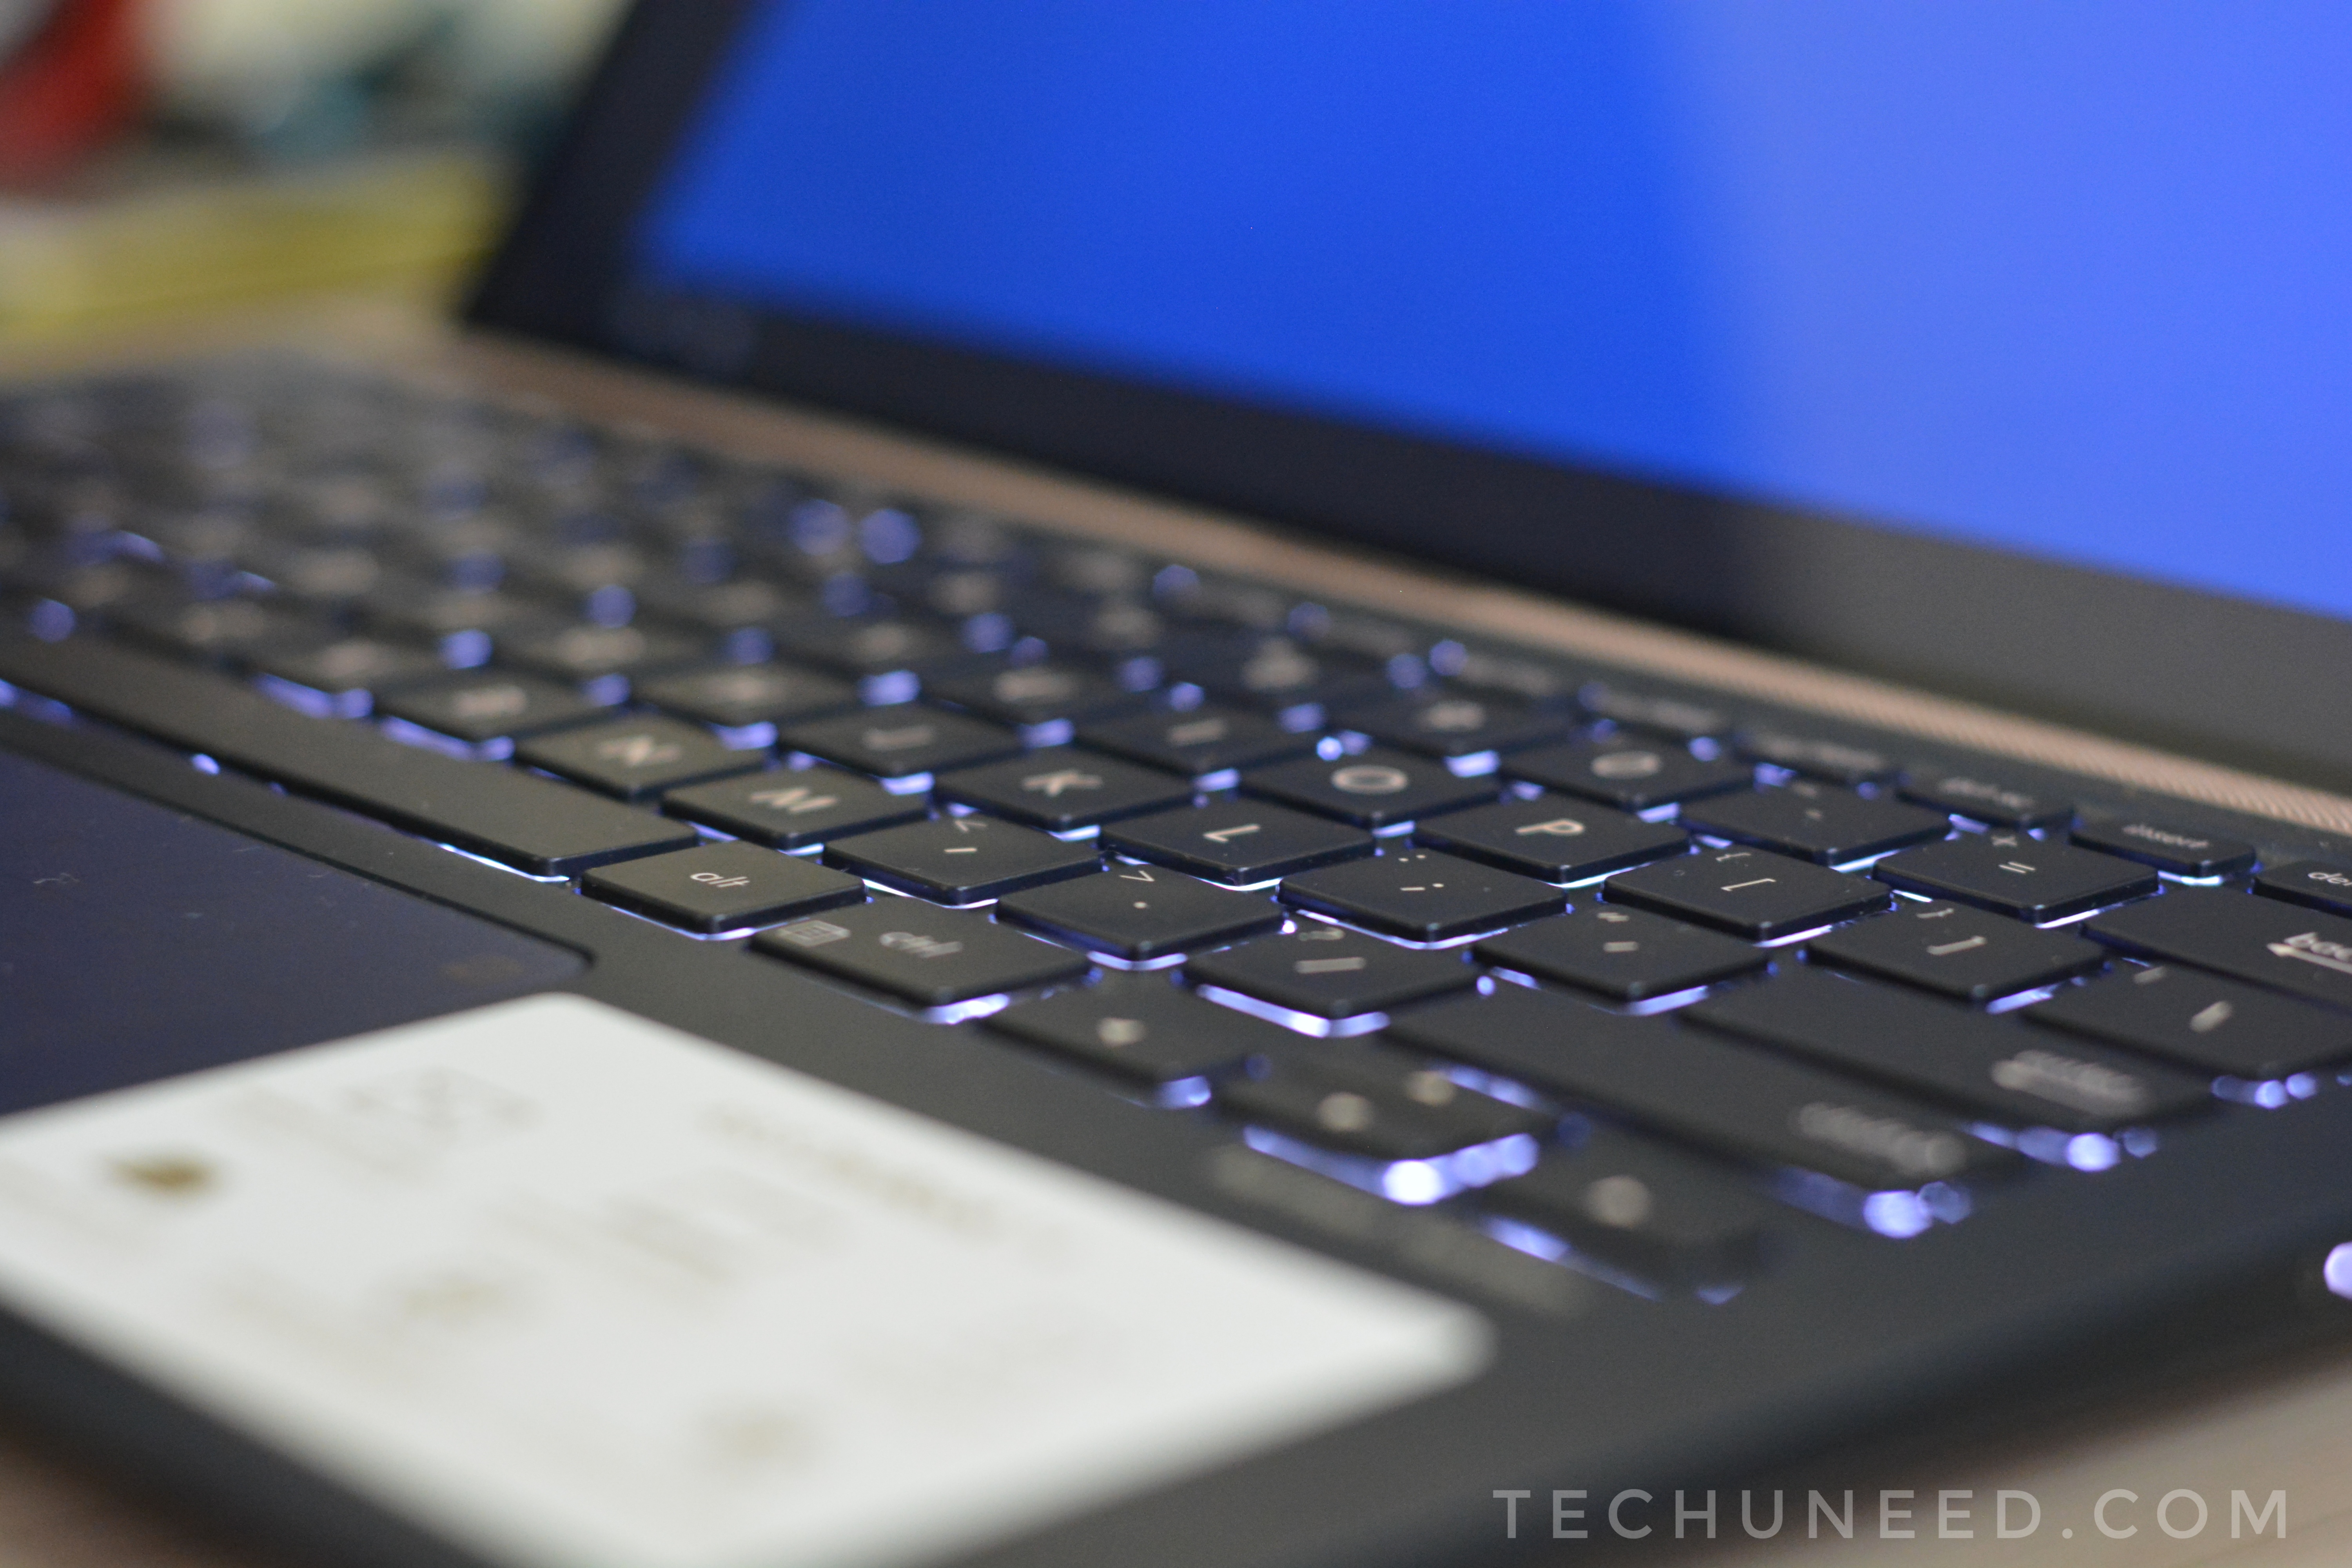 Asus Zenbook 14 UX433F Keyboard